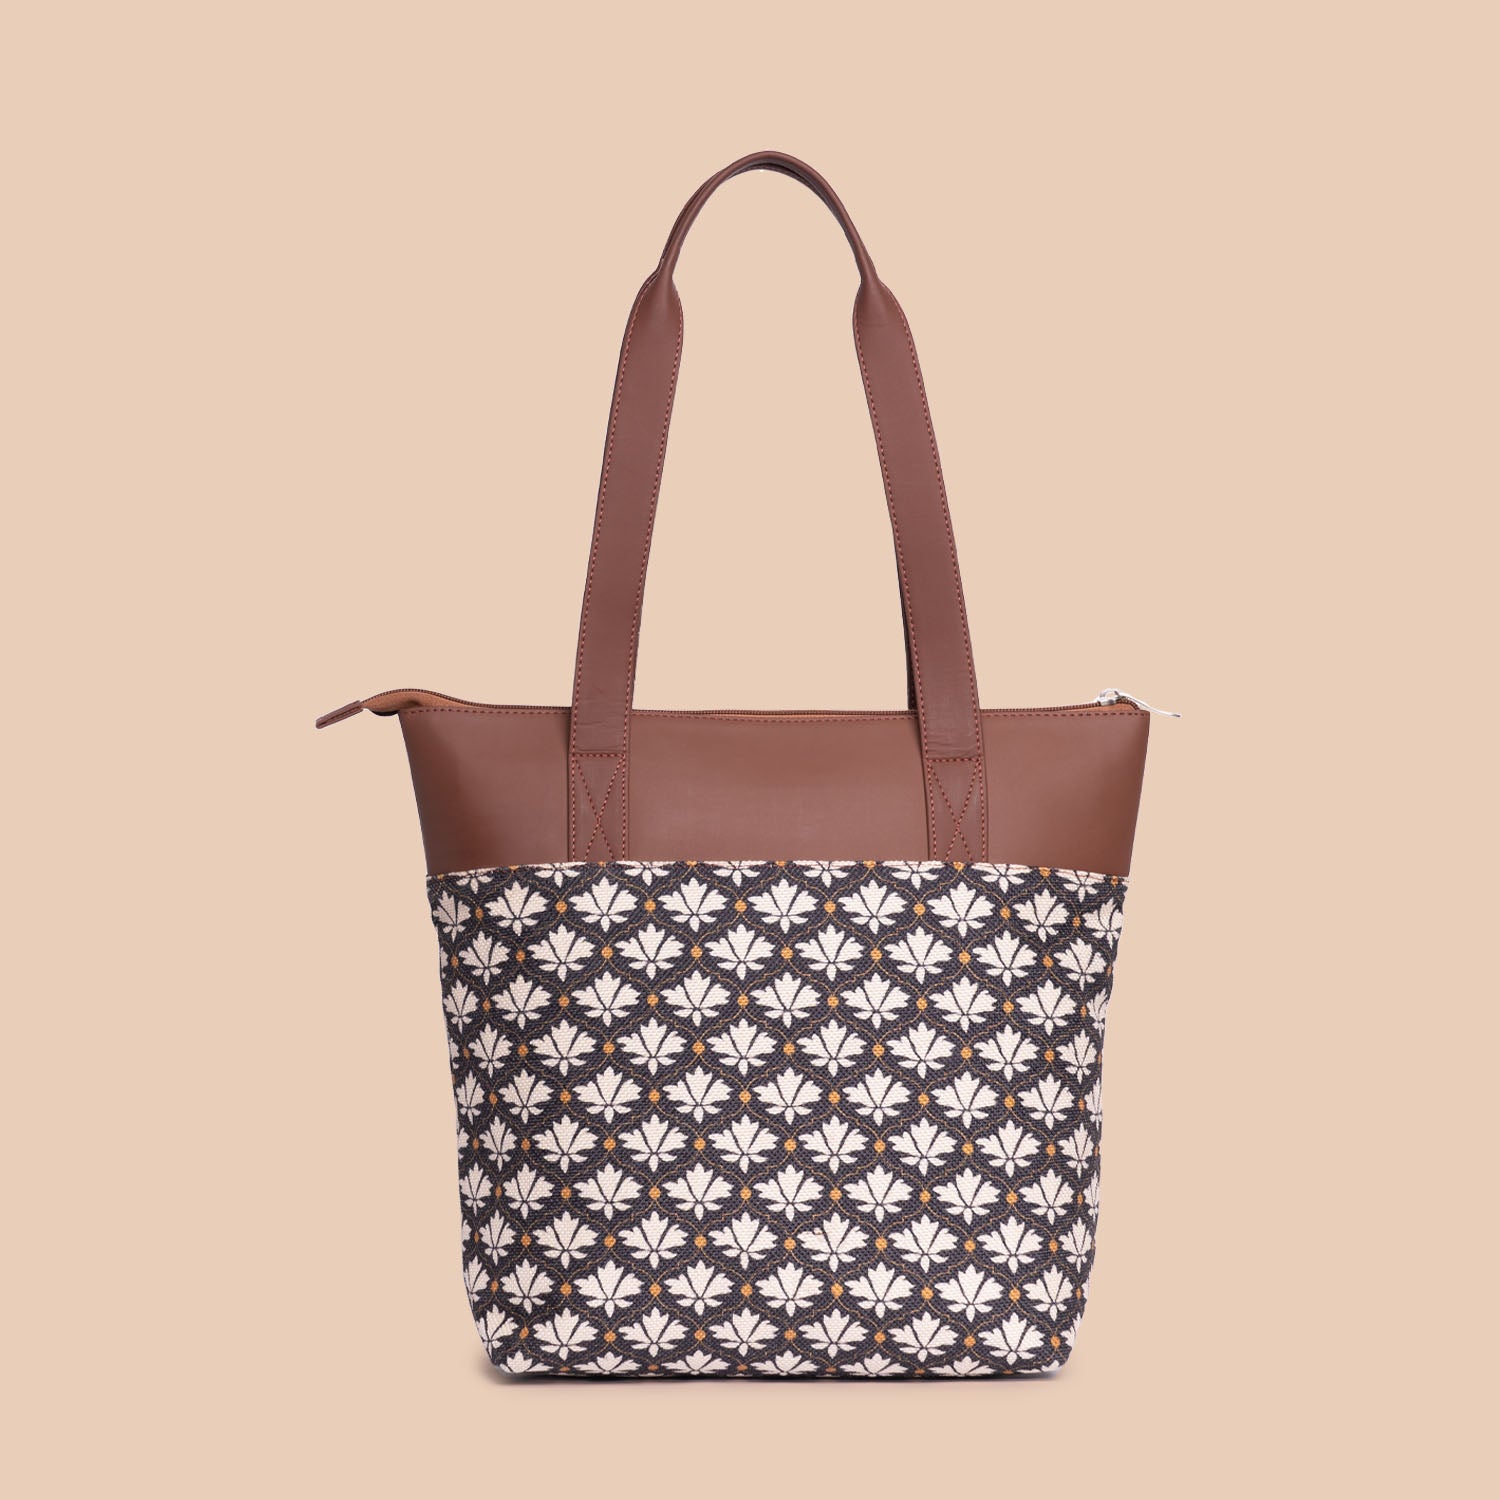 Bidri Kaiser & Lattice Lace - Everyday Tote Bag & Flap Sling Bag Combo